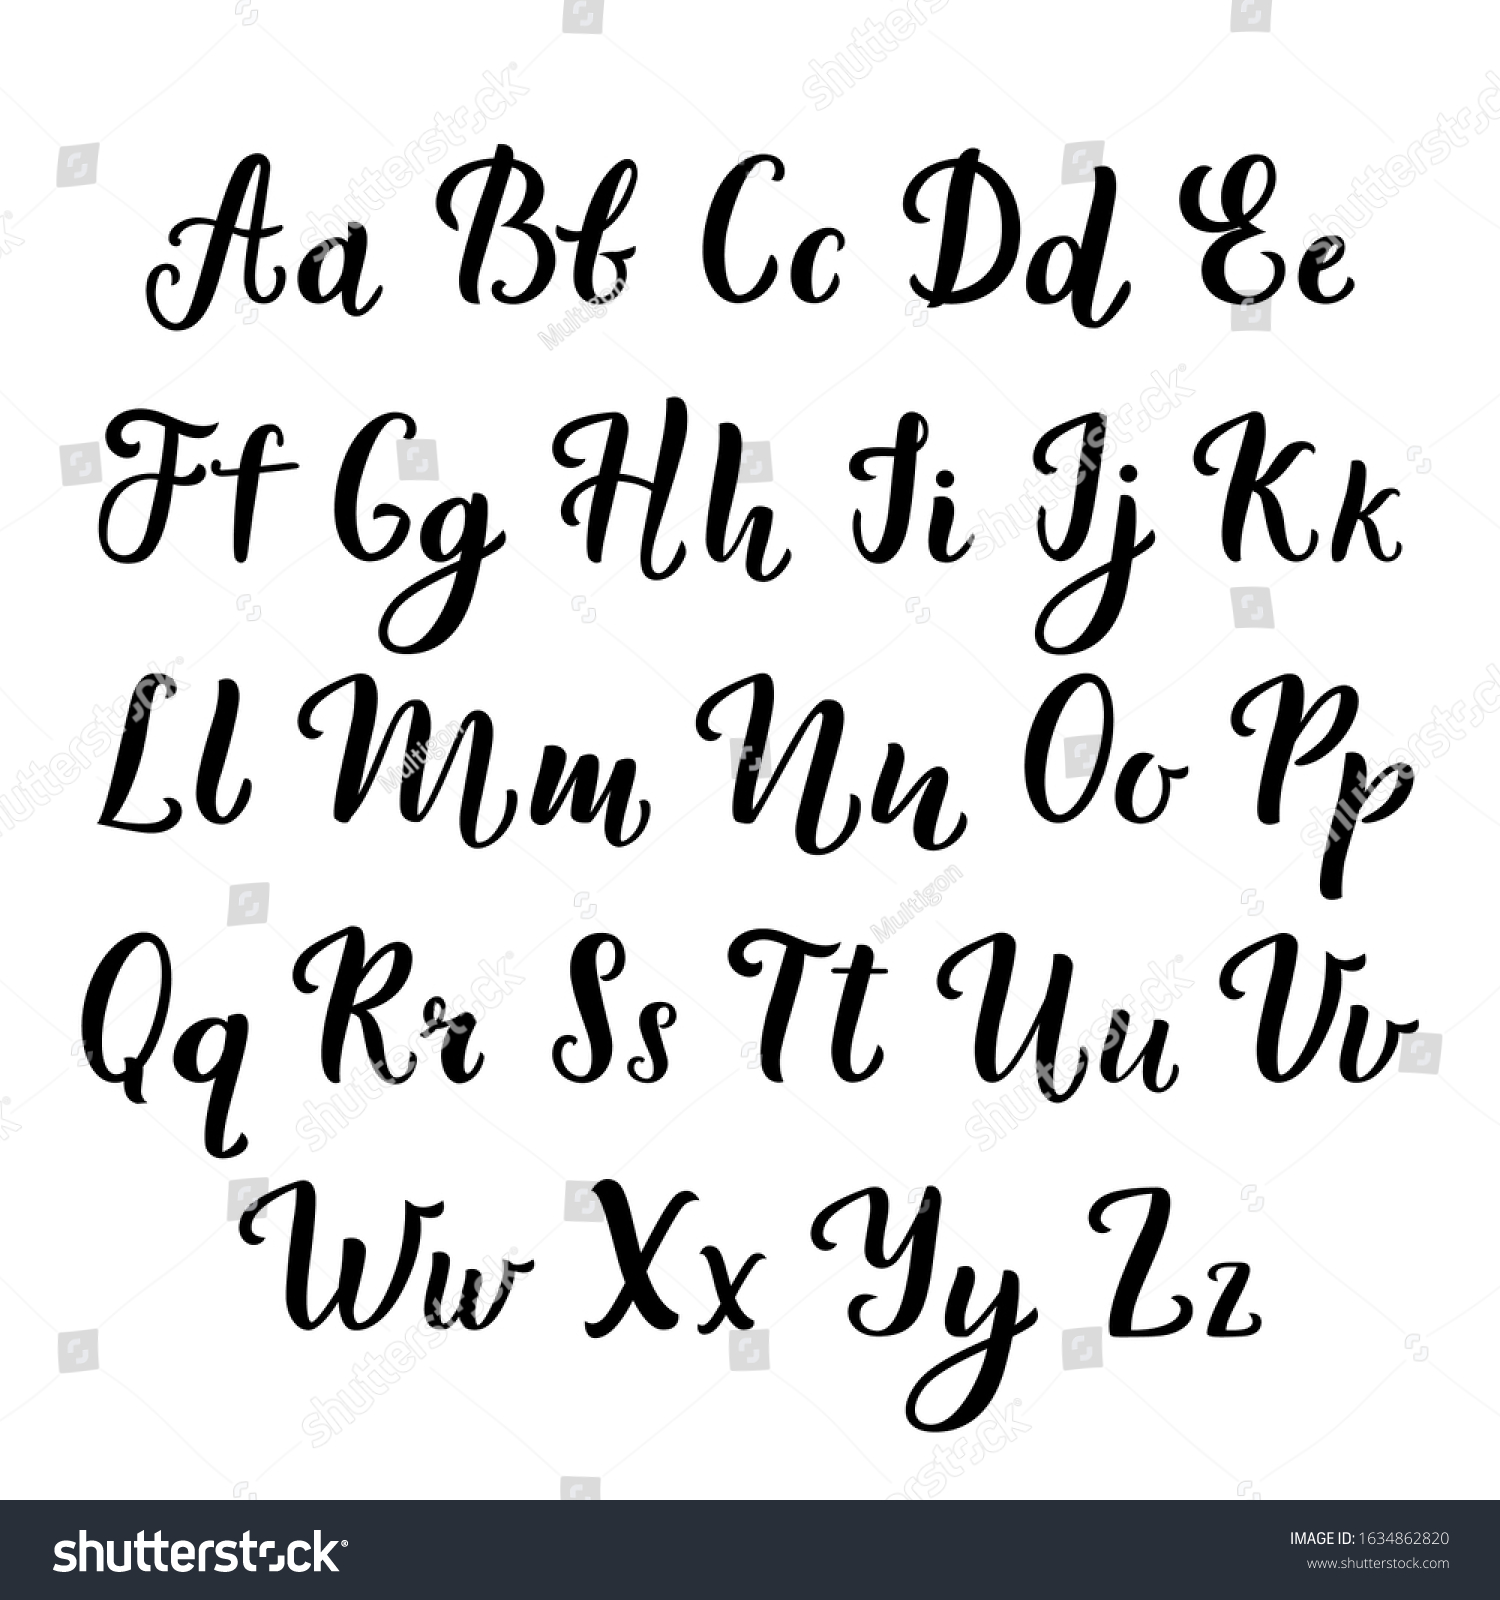 Hand Lettering Calligraphic Alphabet Script Letters Stock Vector ...